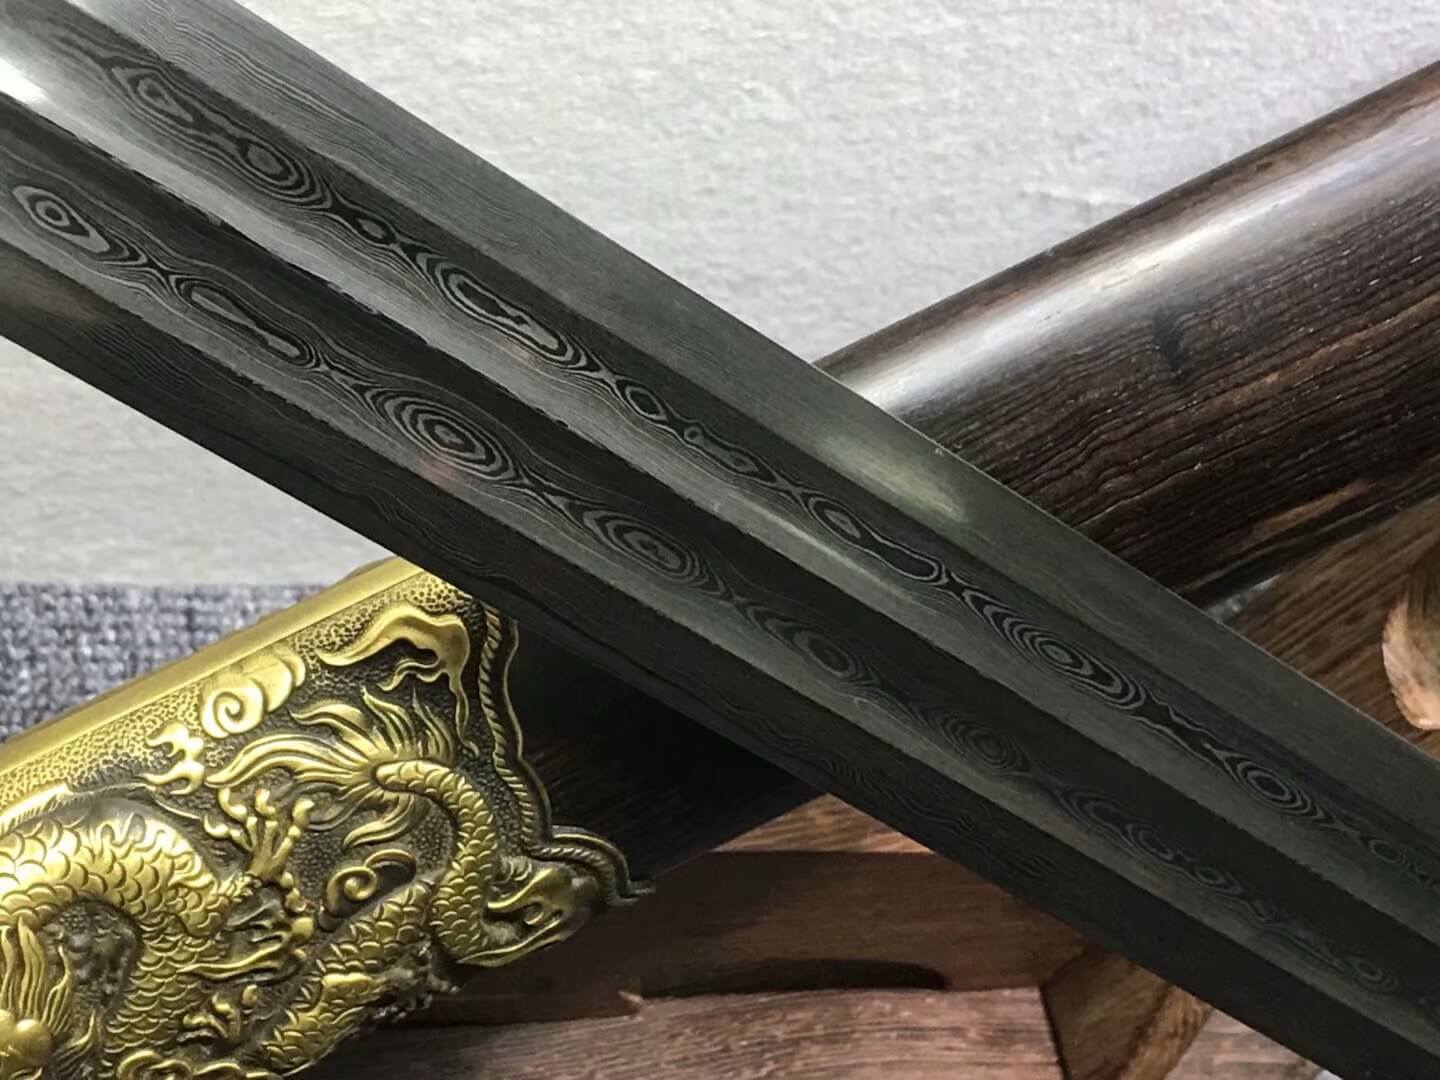 Longquan sword,Damascus steel blade,Black scabbard,Brass - Chinese sword shop